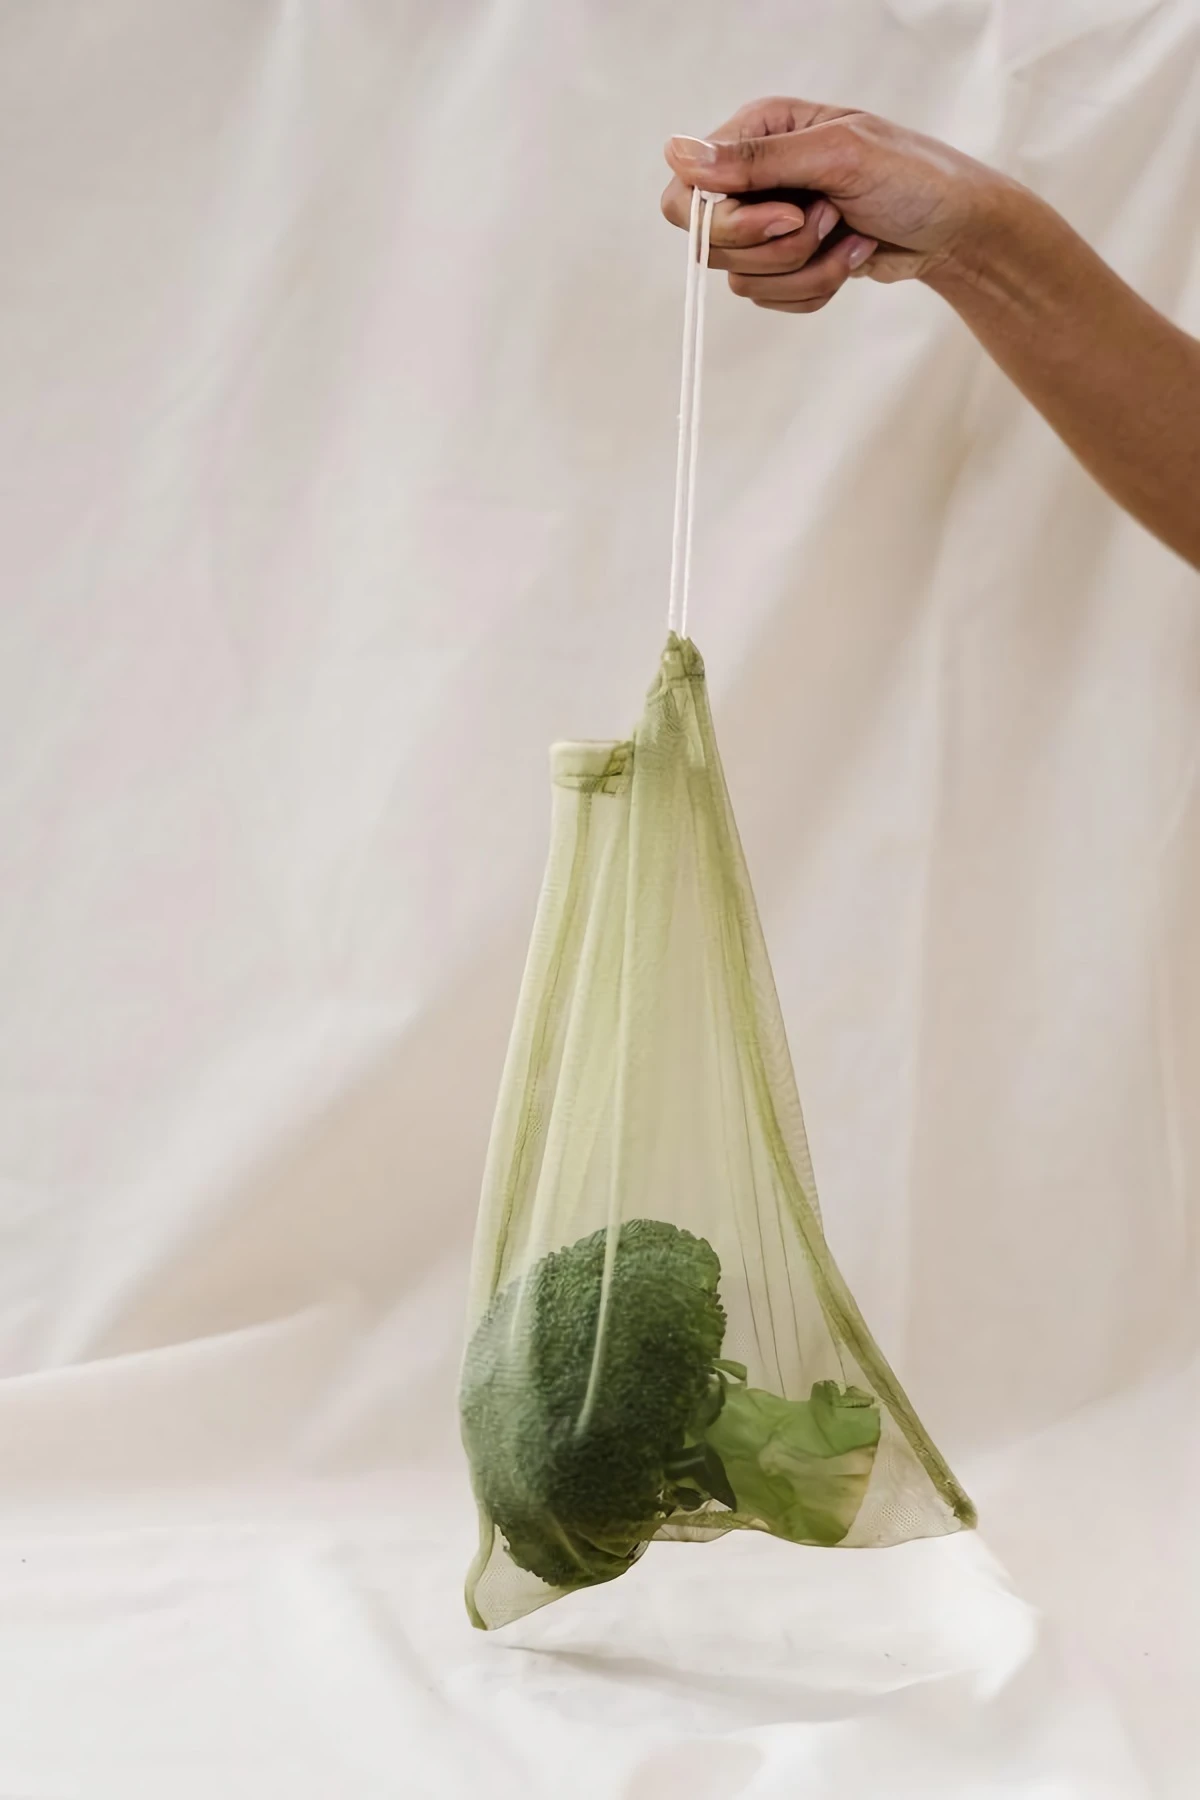 a broccoli in a mesh bag